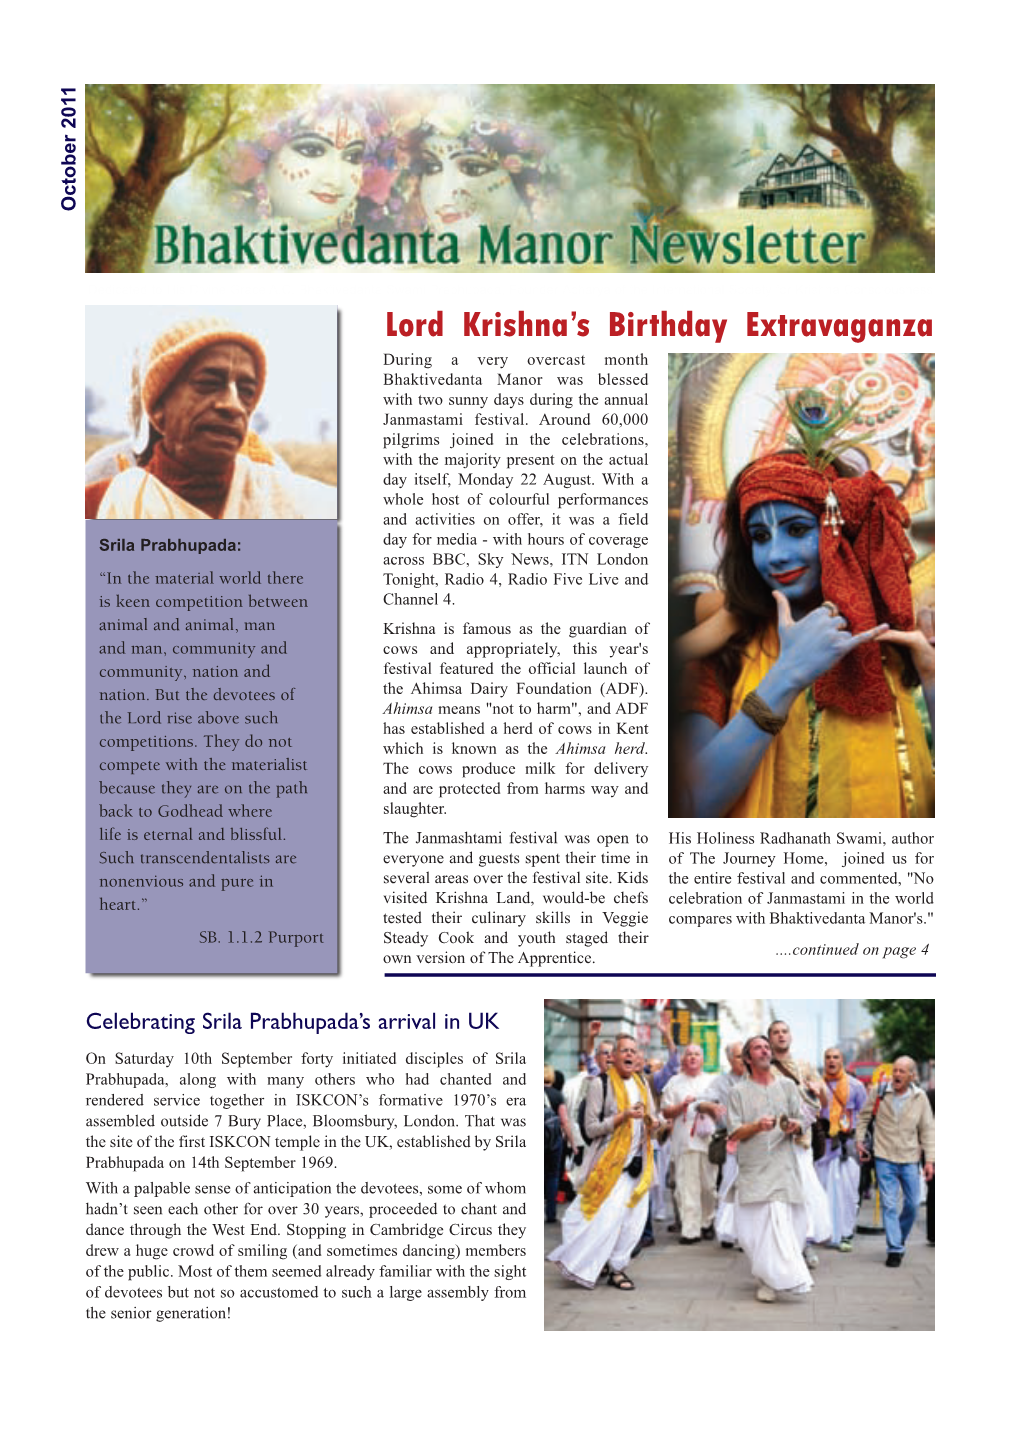 Lord Krishna's Birthday Extravaganza